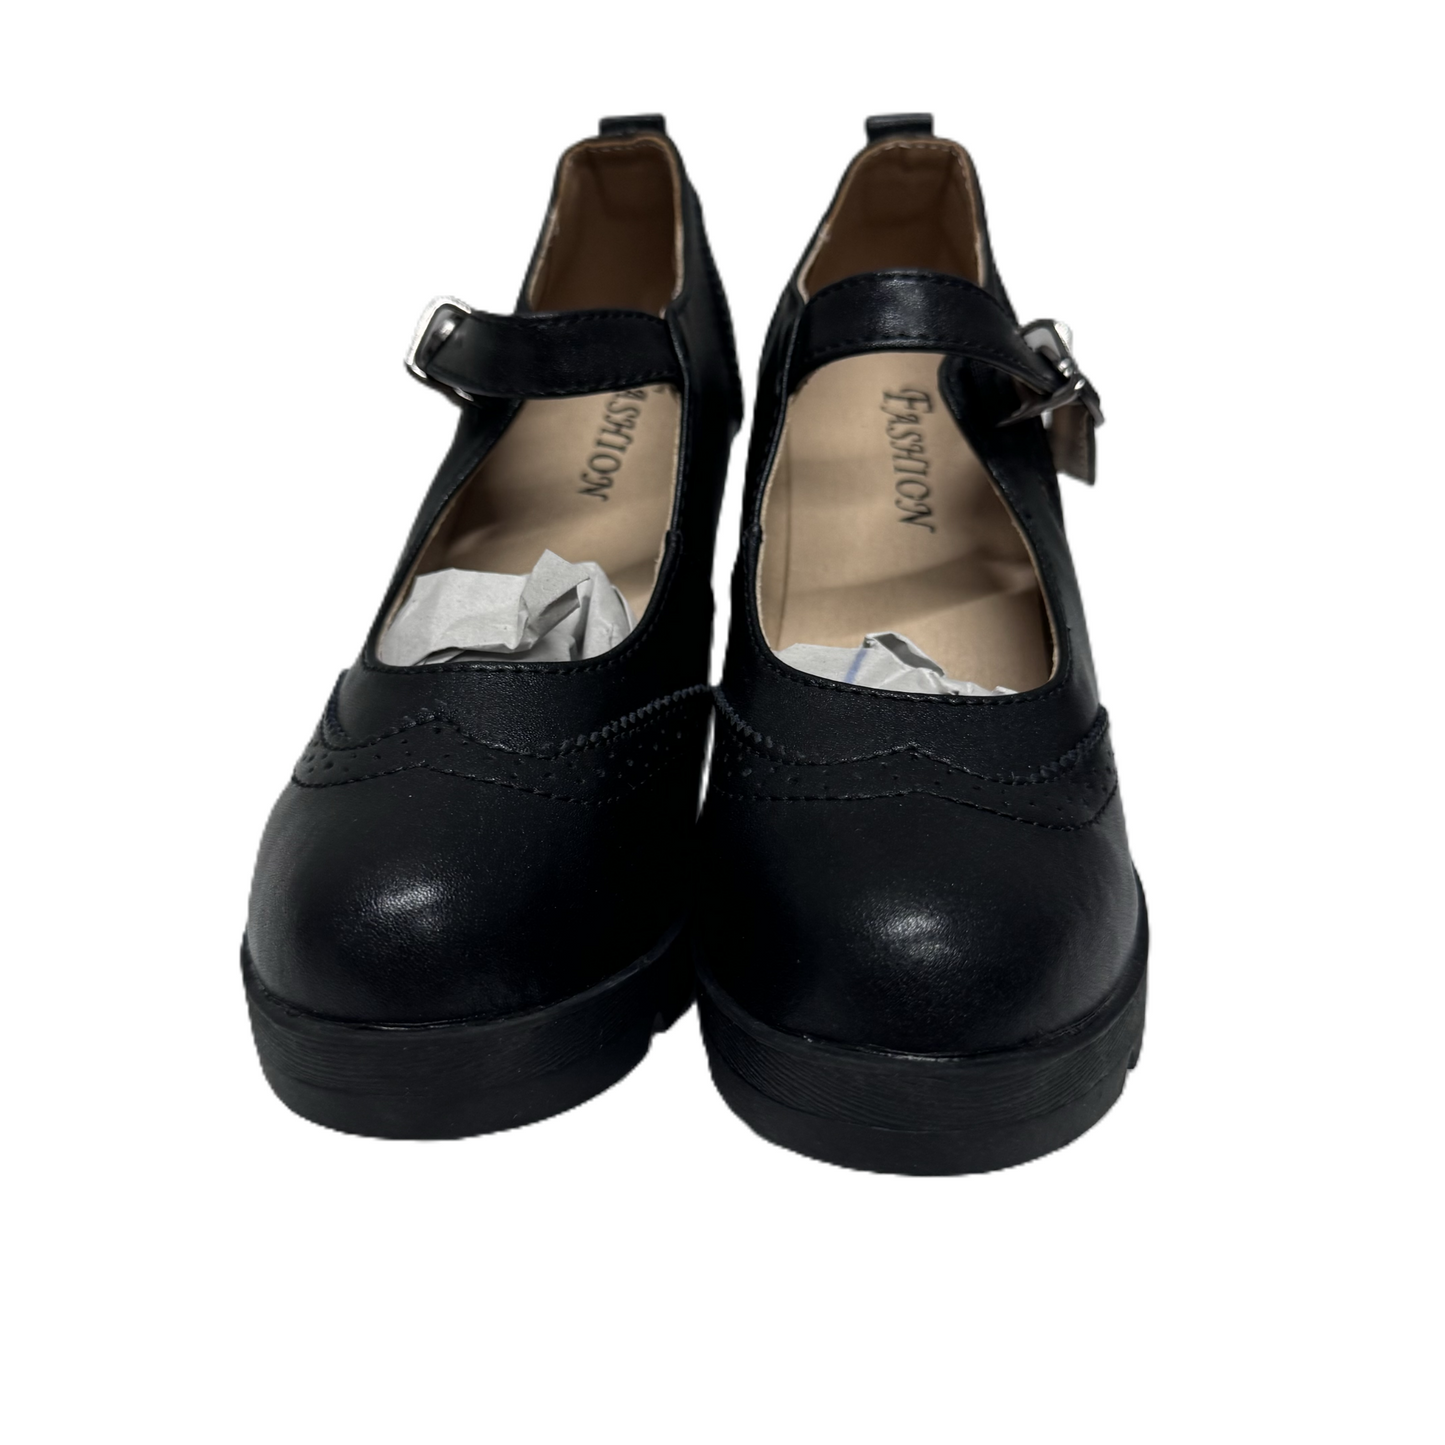 Shoes Heels Block By Dadawen, Size: 8.5